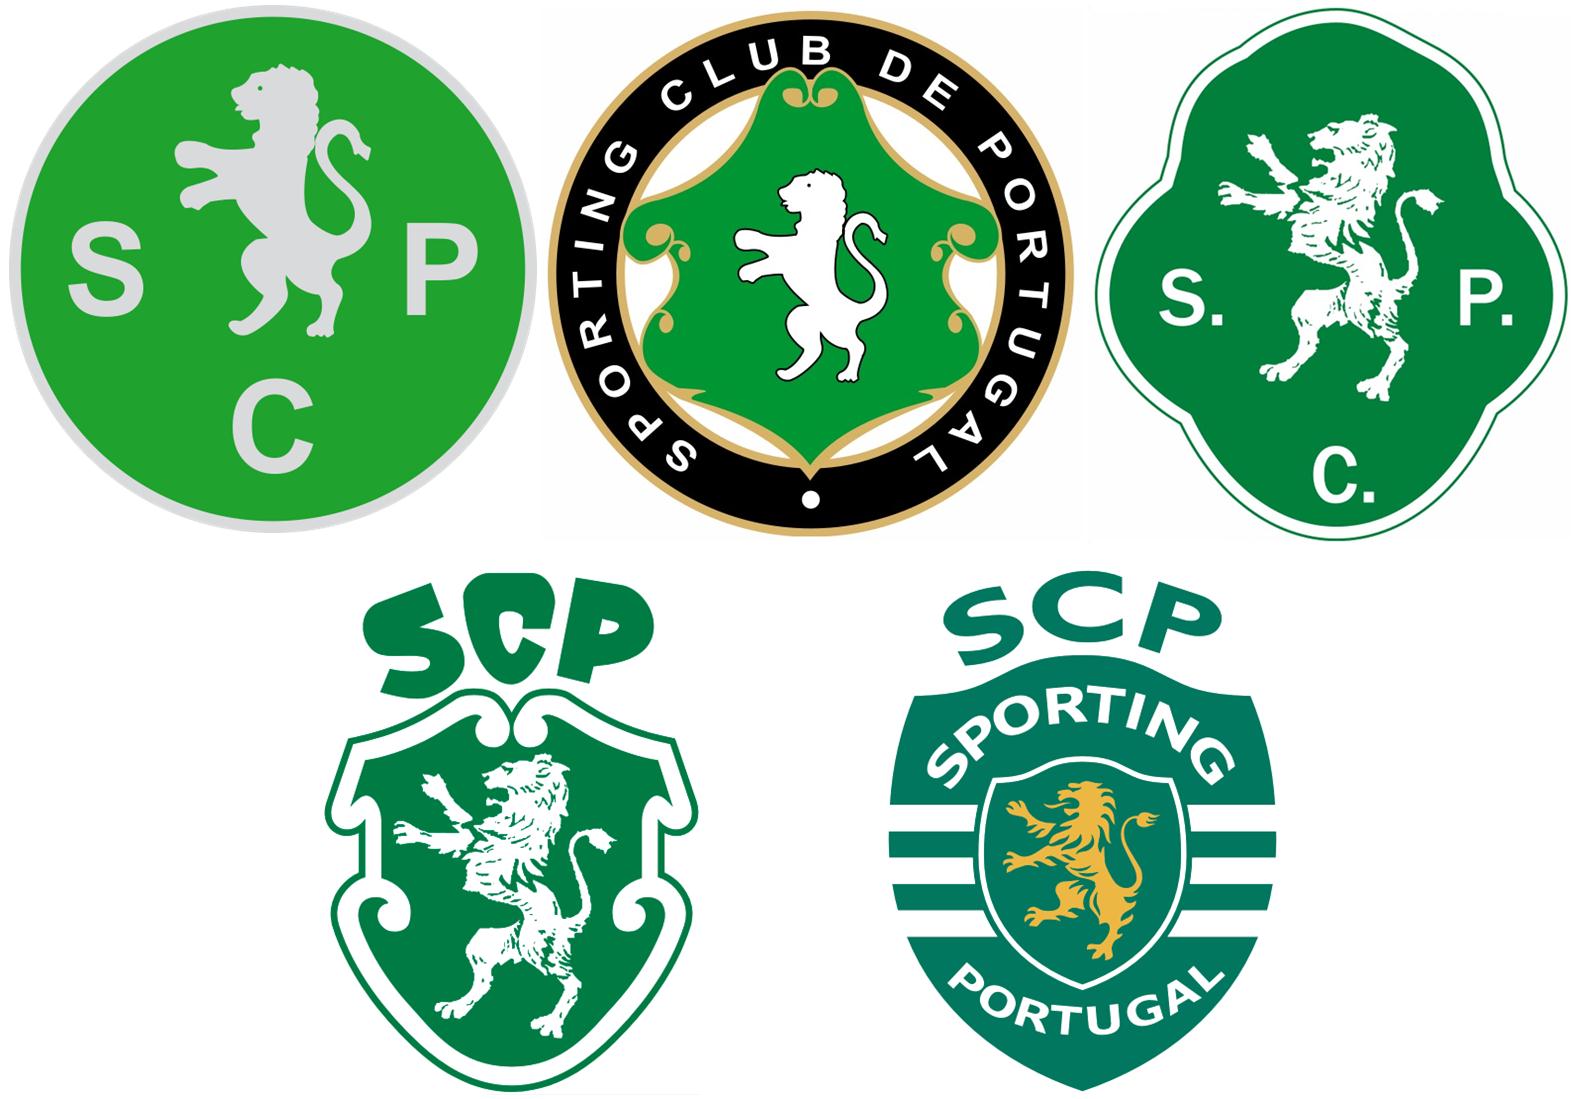 Спортинг футбольный клуб таблица. Спортинг логотип. Sporting Portugal лого. ФК Спортинг Лиссабон Эволюция эмблемы. Фиеста футбольный клуб.